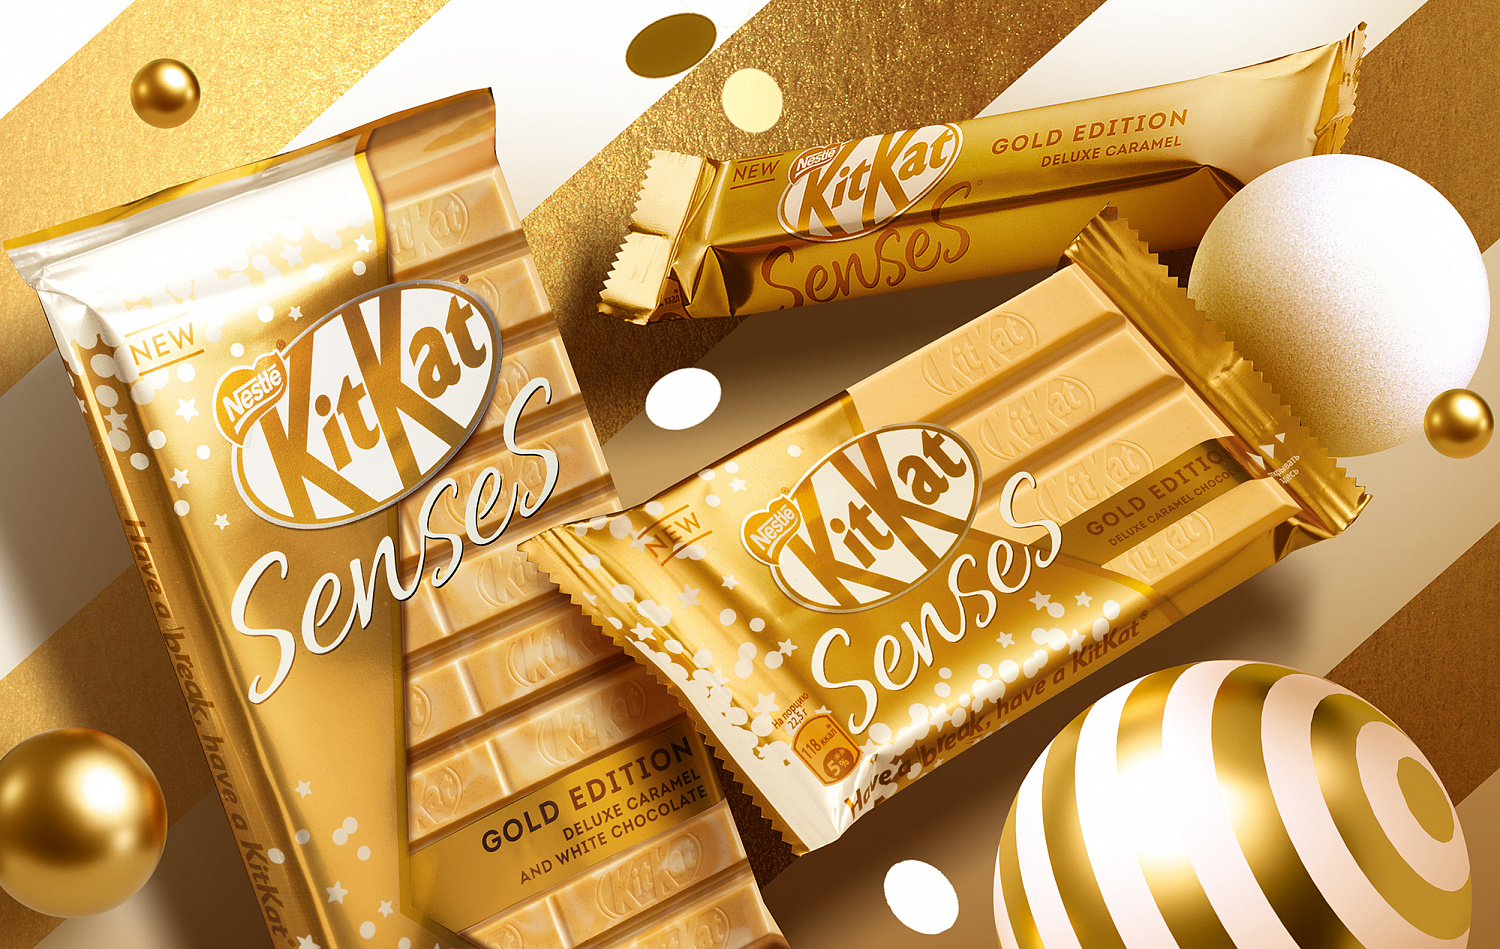 KitKat Sense Gold Edition - Портфолио Depot